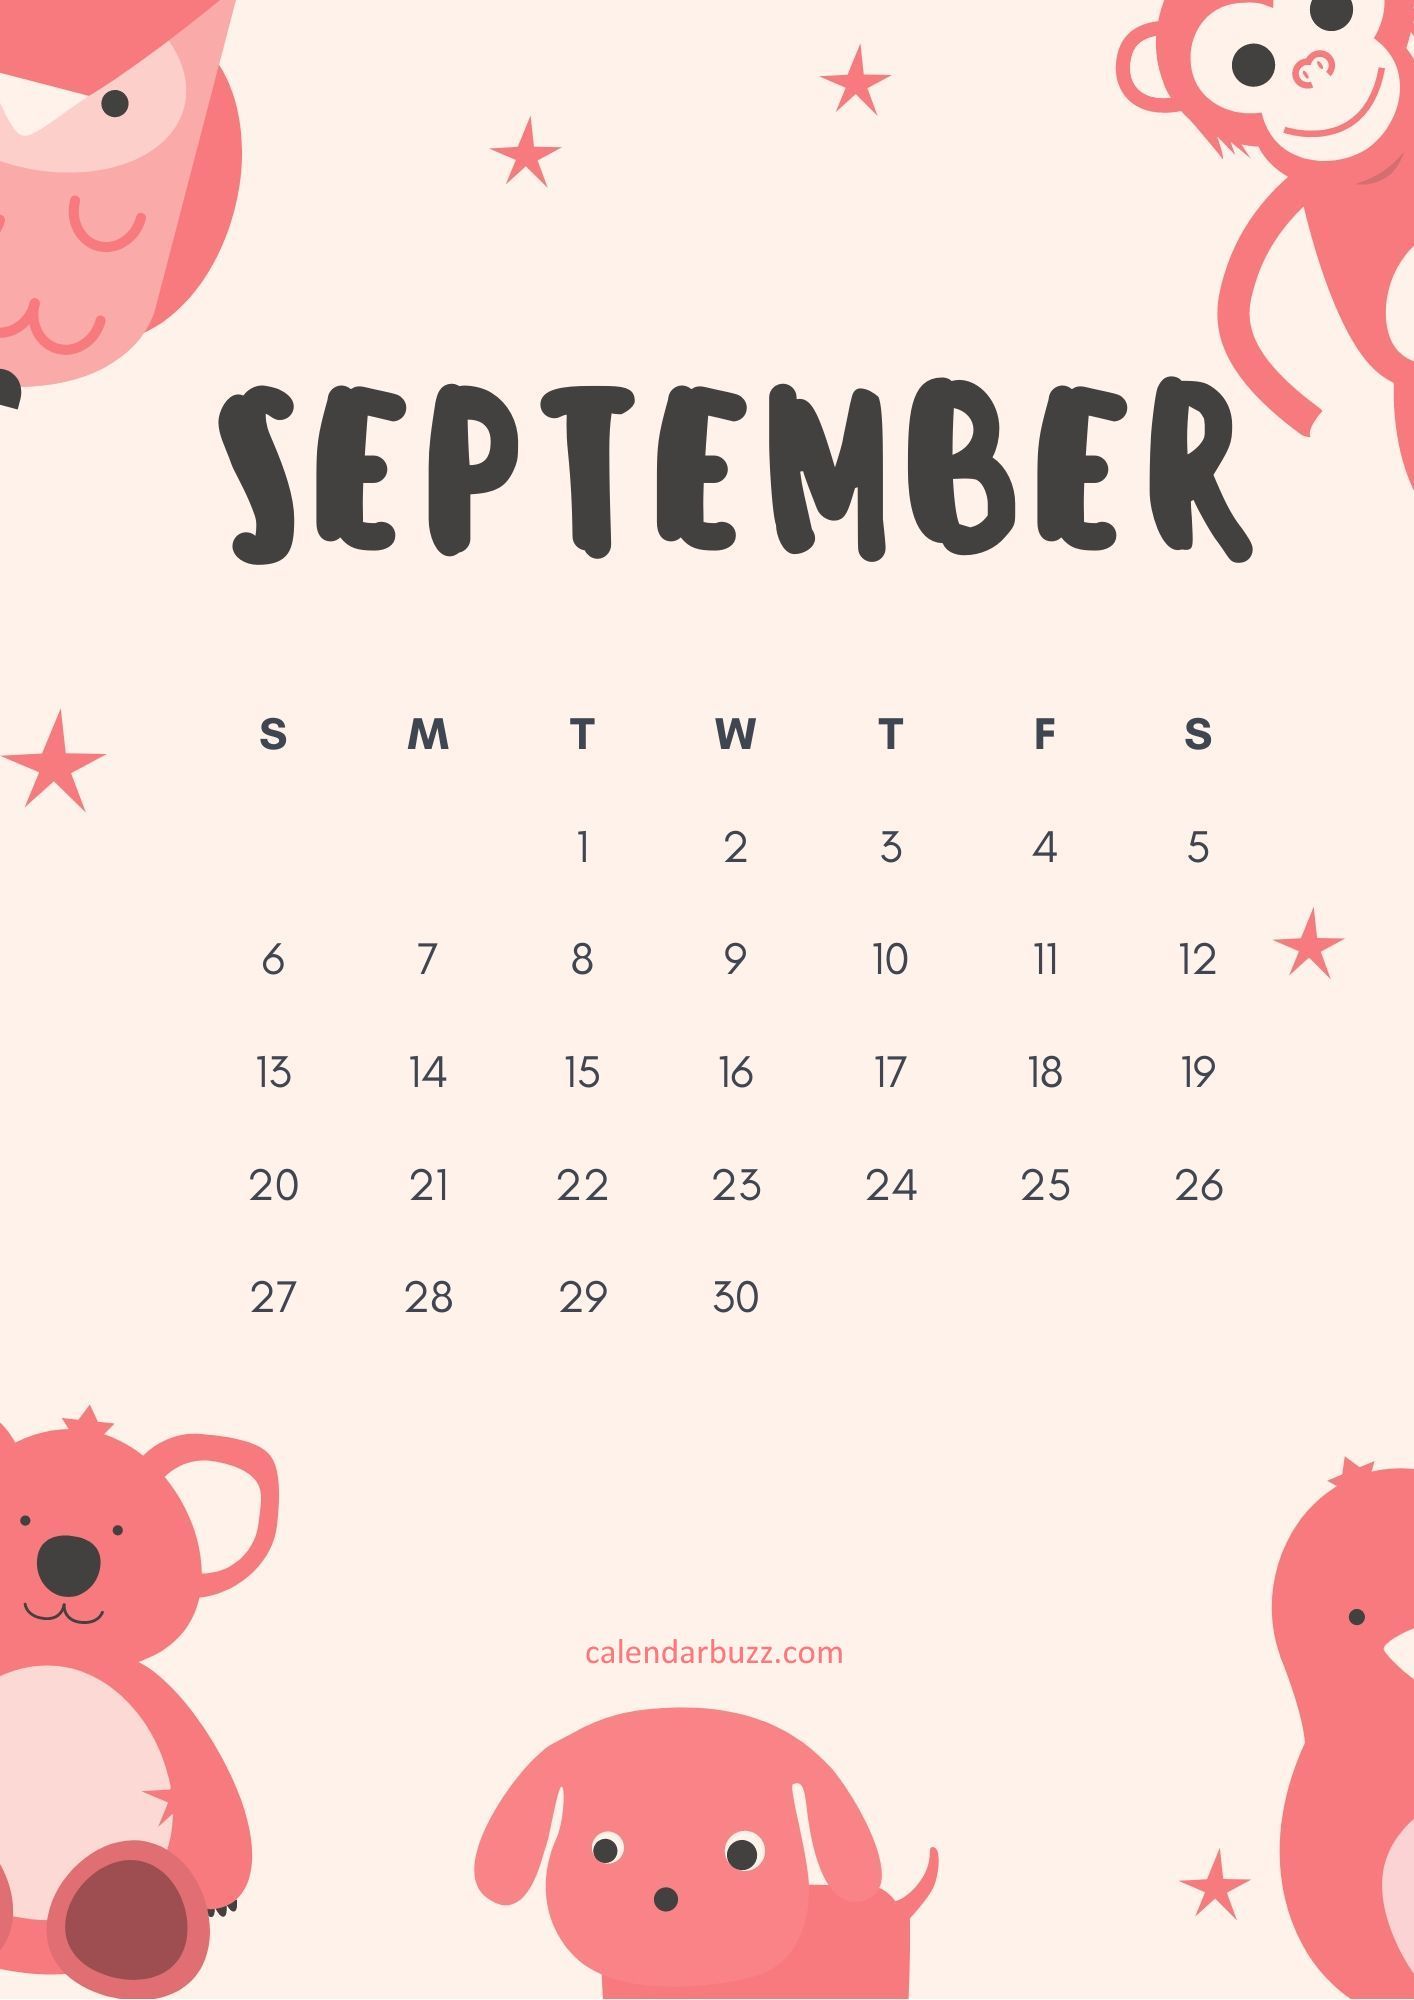 September 2020 Mobile Calendar Wallpaper Download